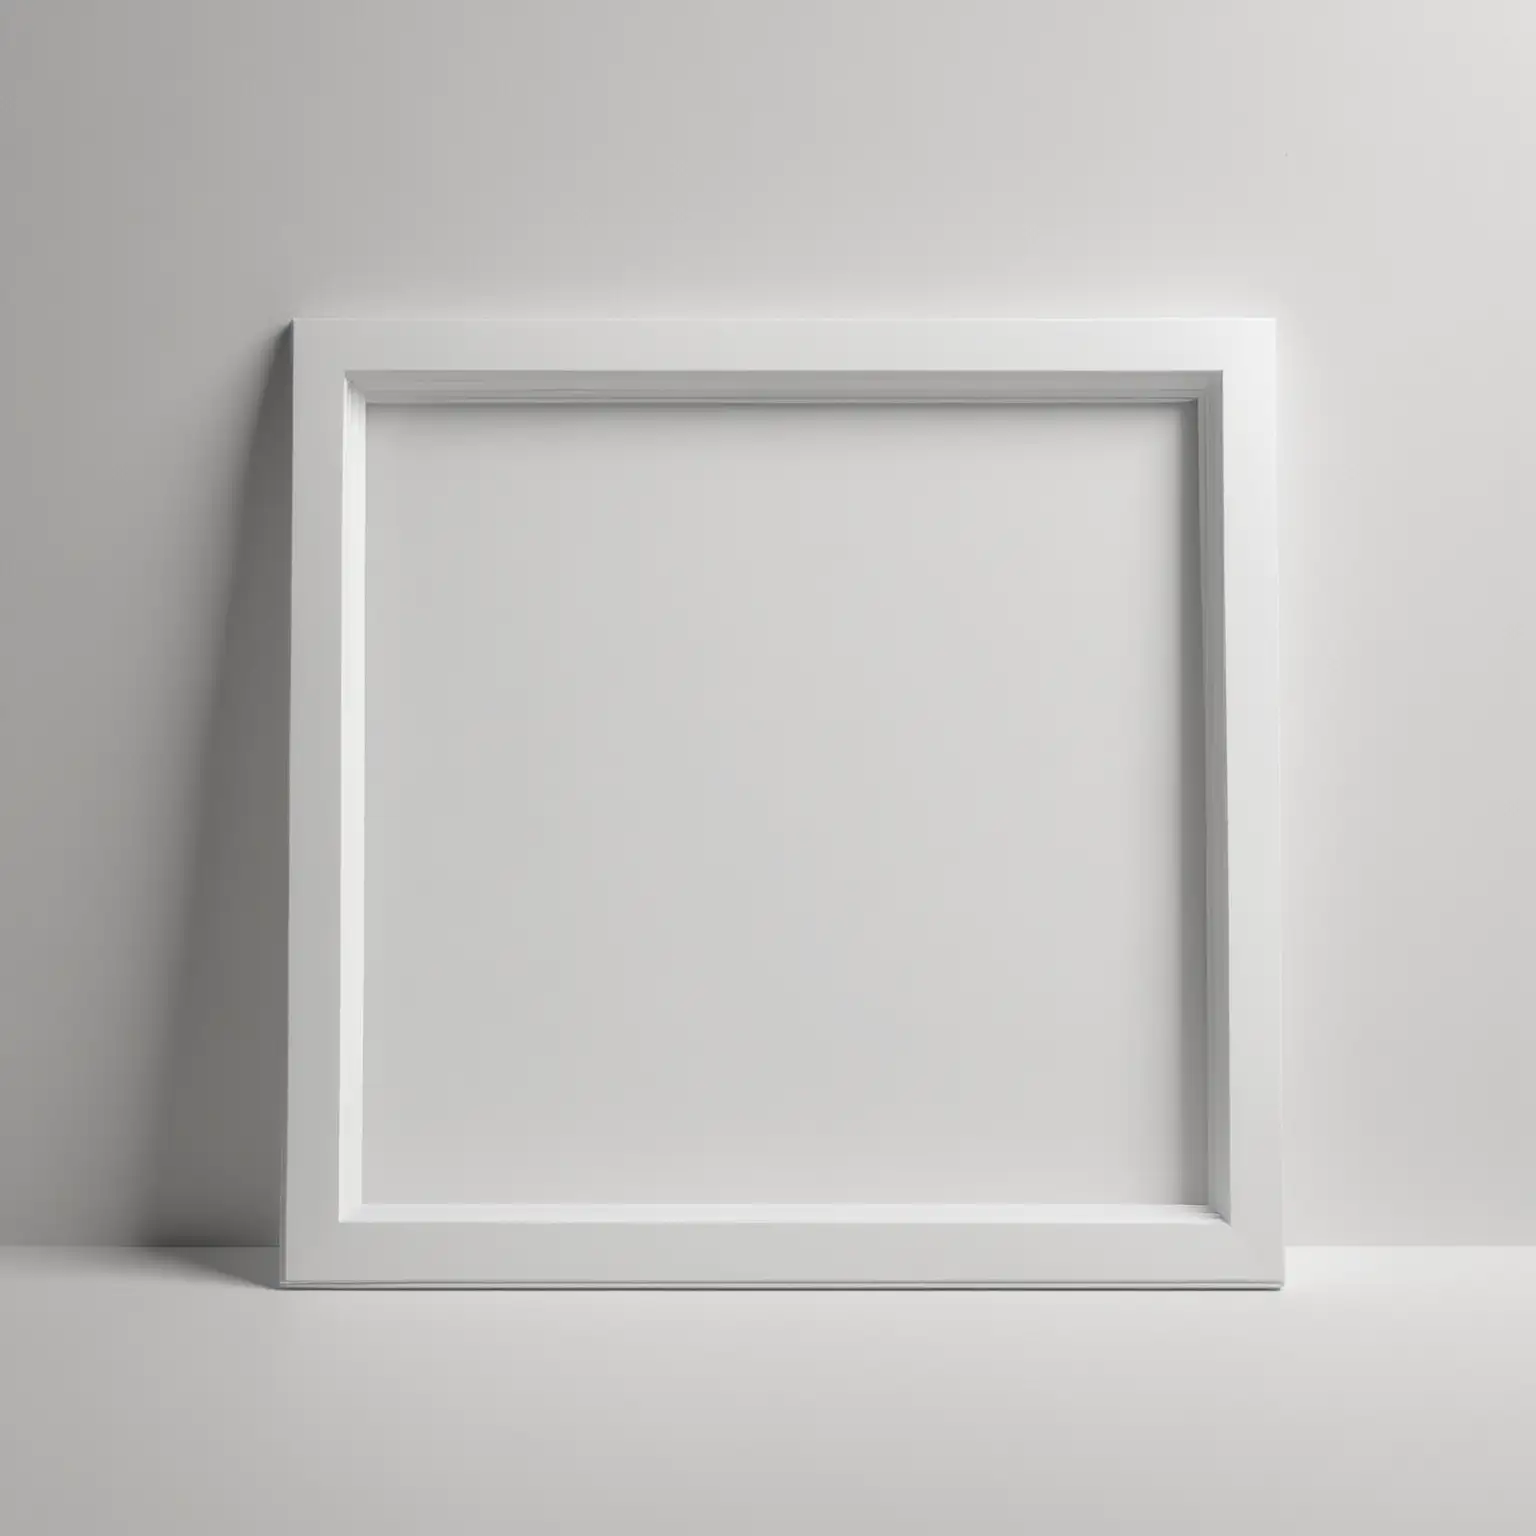 HighResolution-White-Square-Photo-Frame-in-Studio-Setting